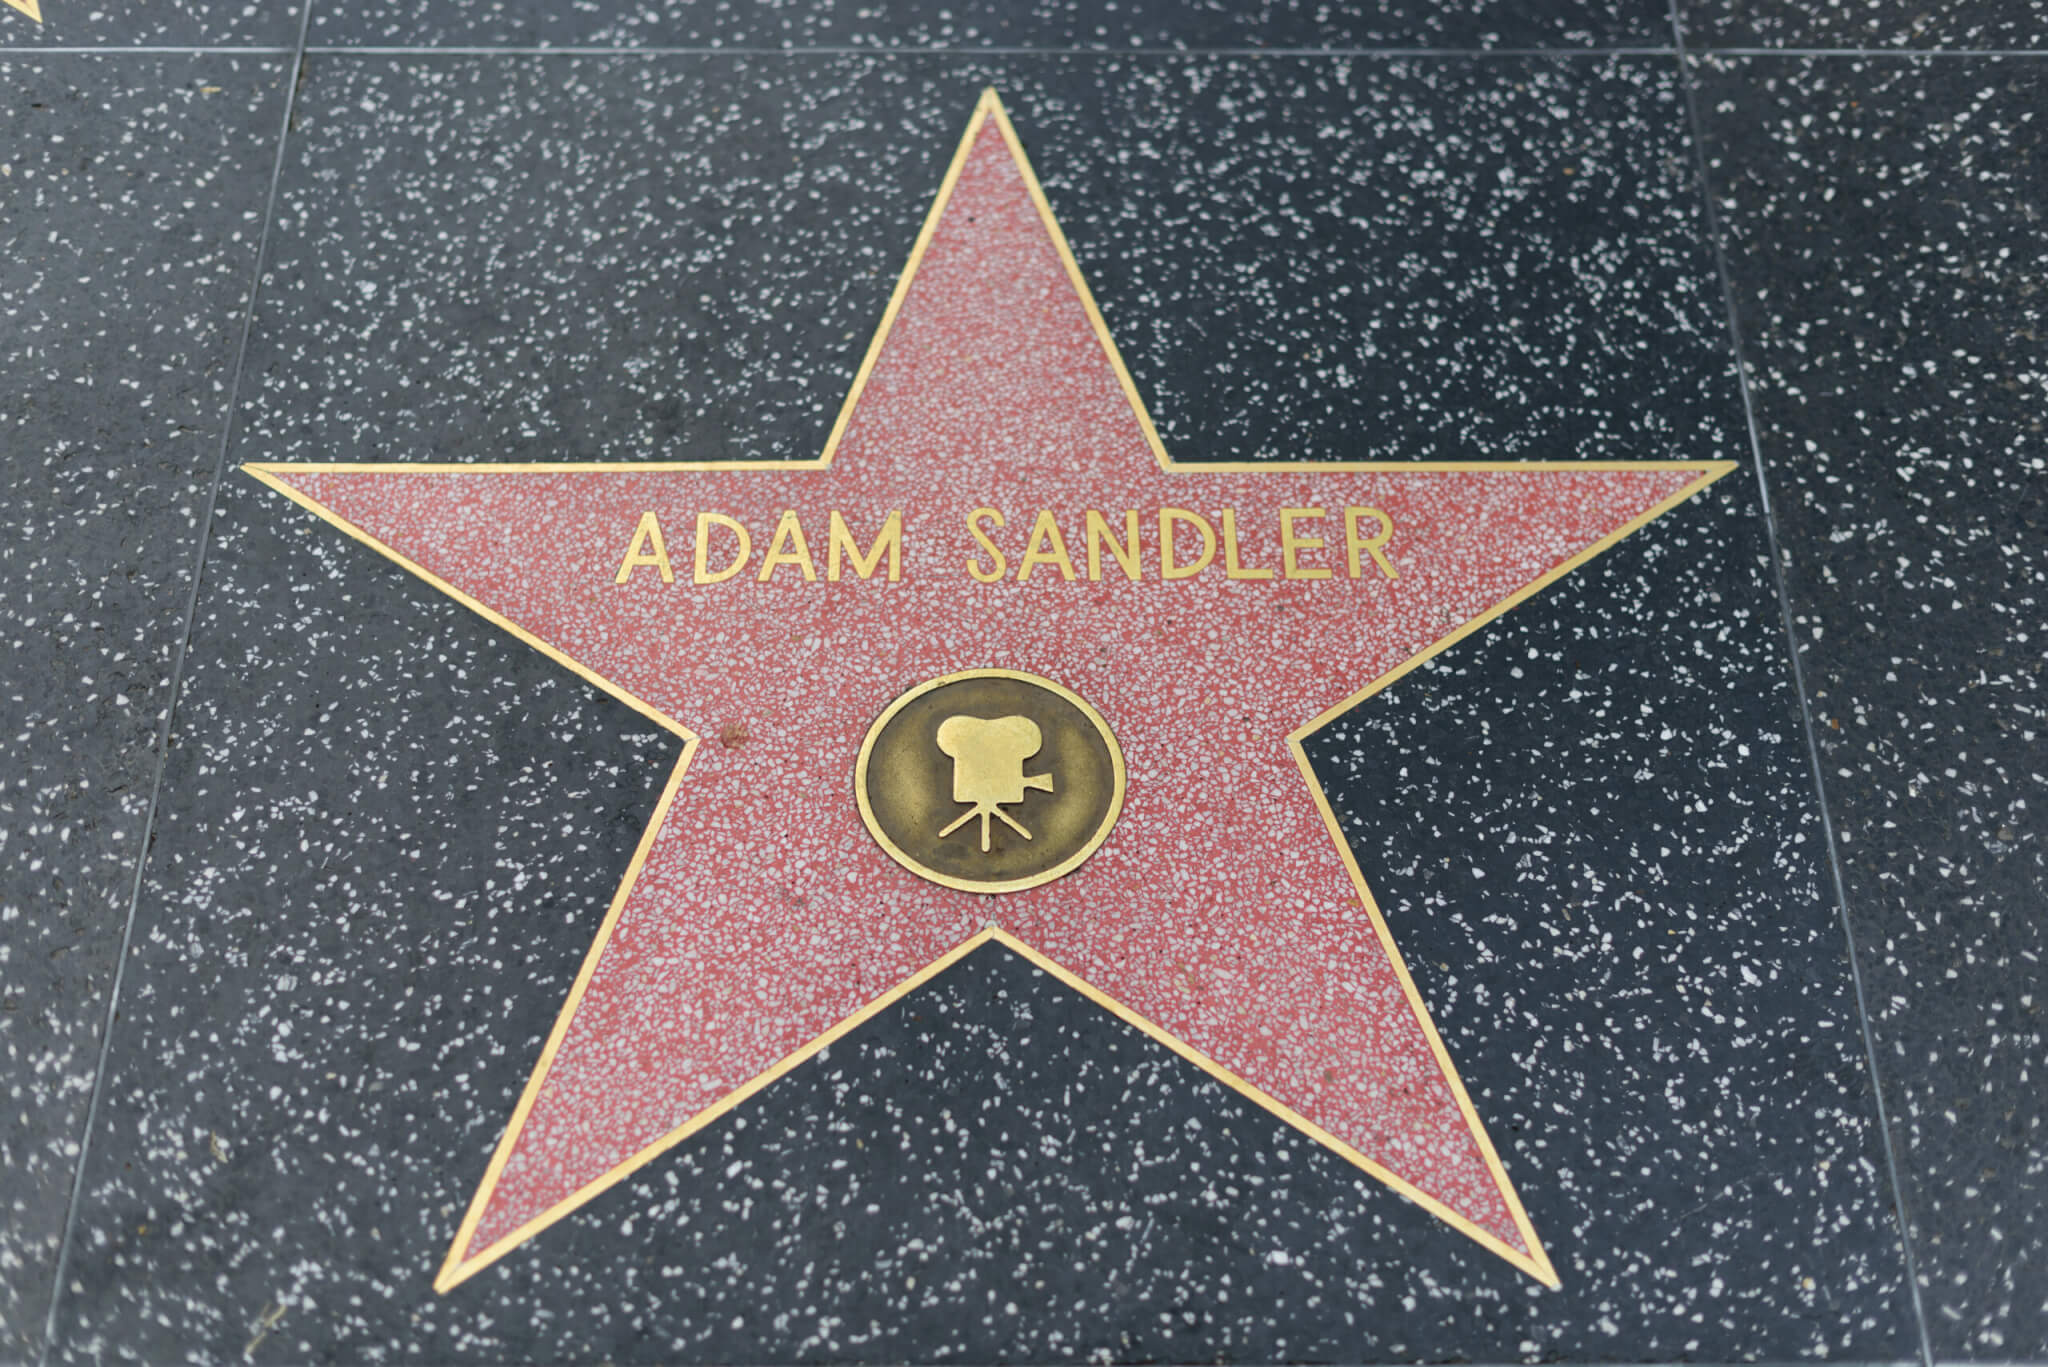 Adam Sandler's Hollywood Walk of Fame star